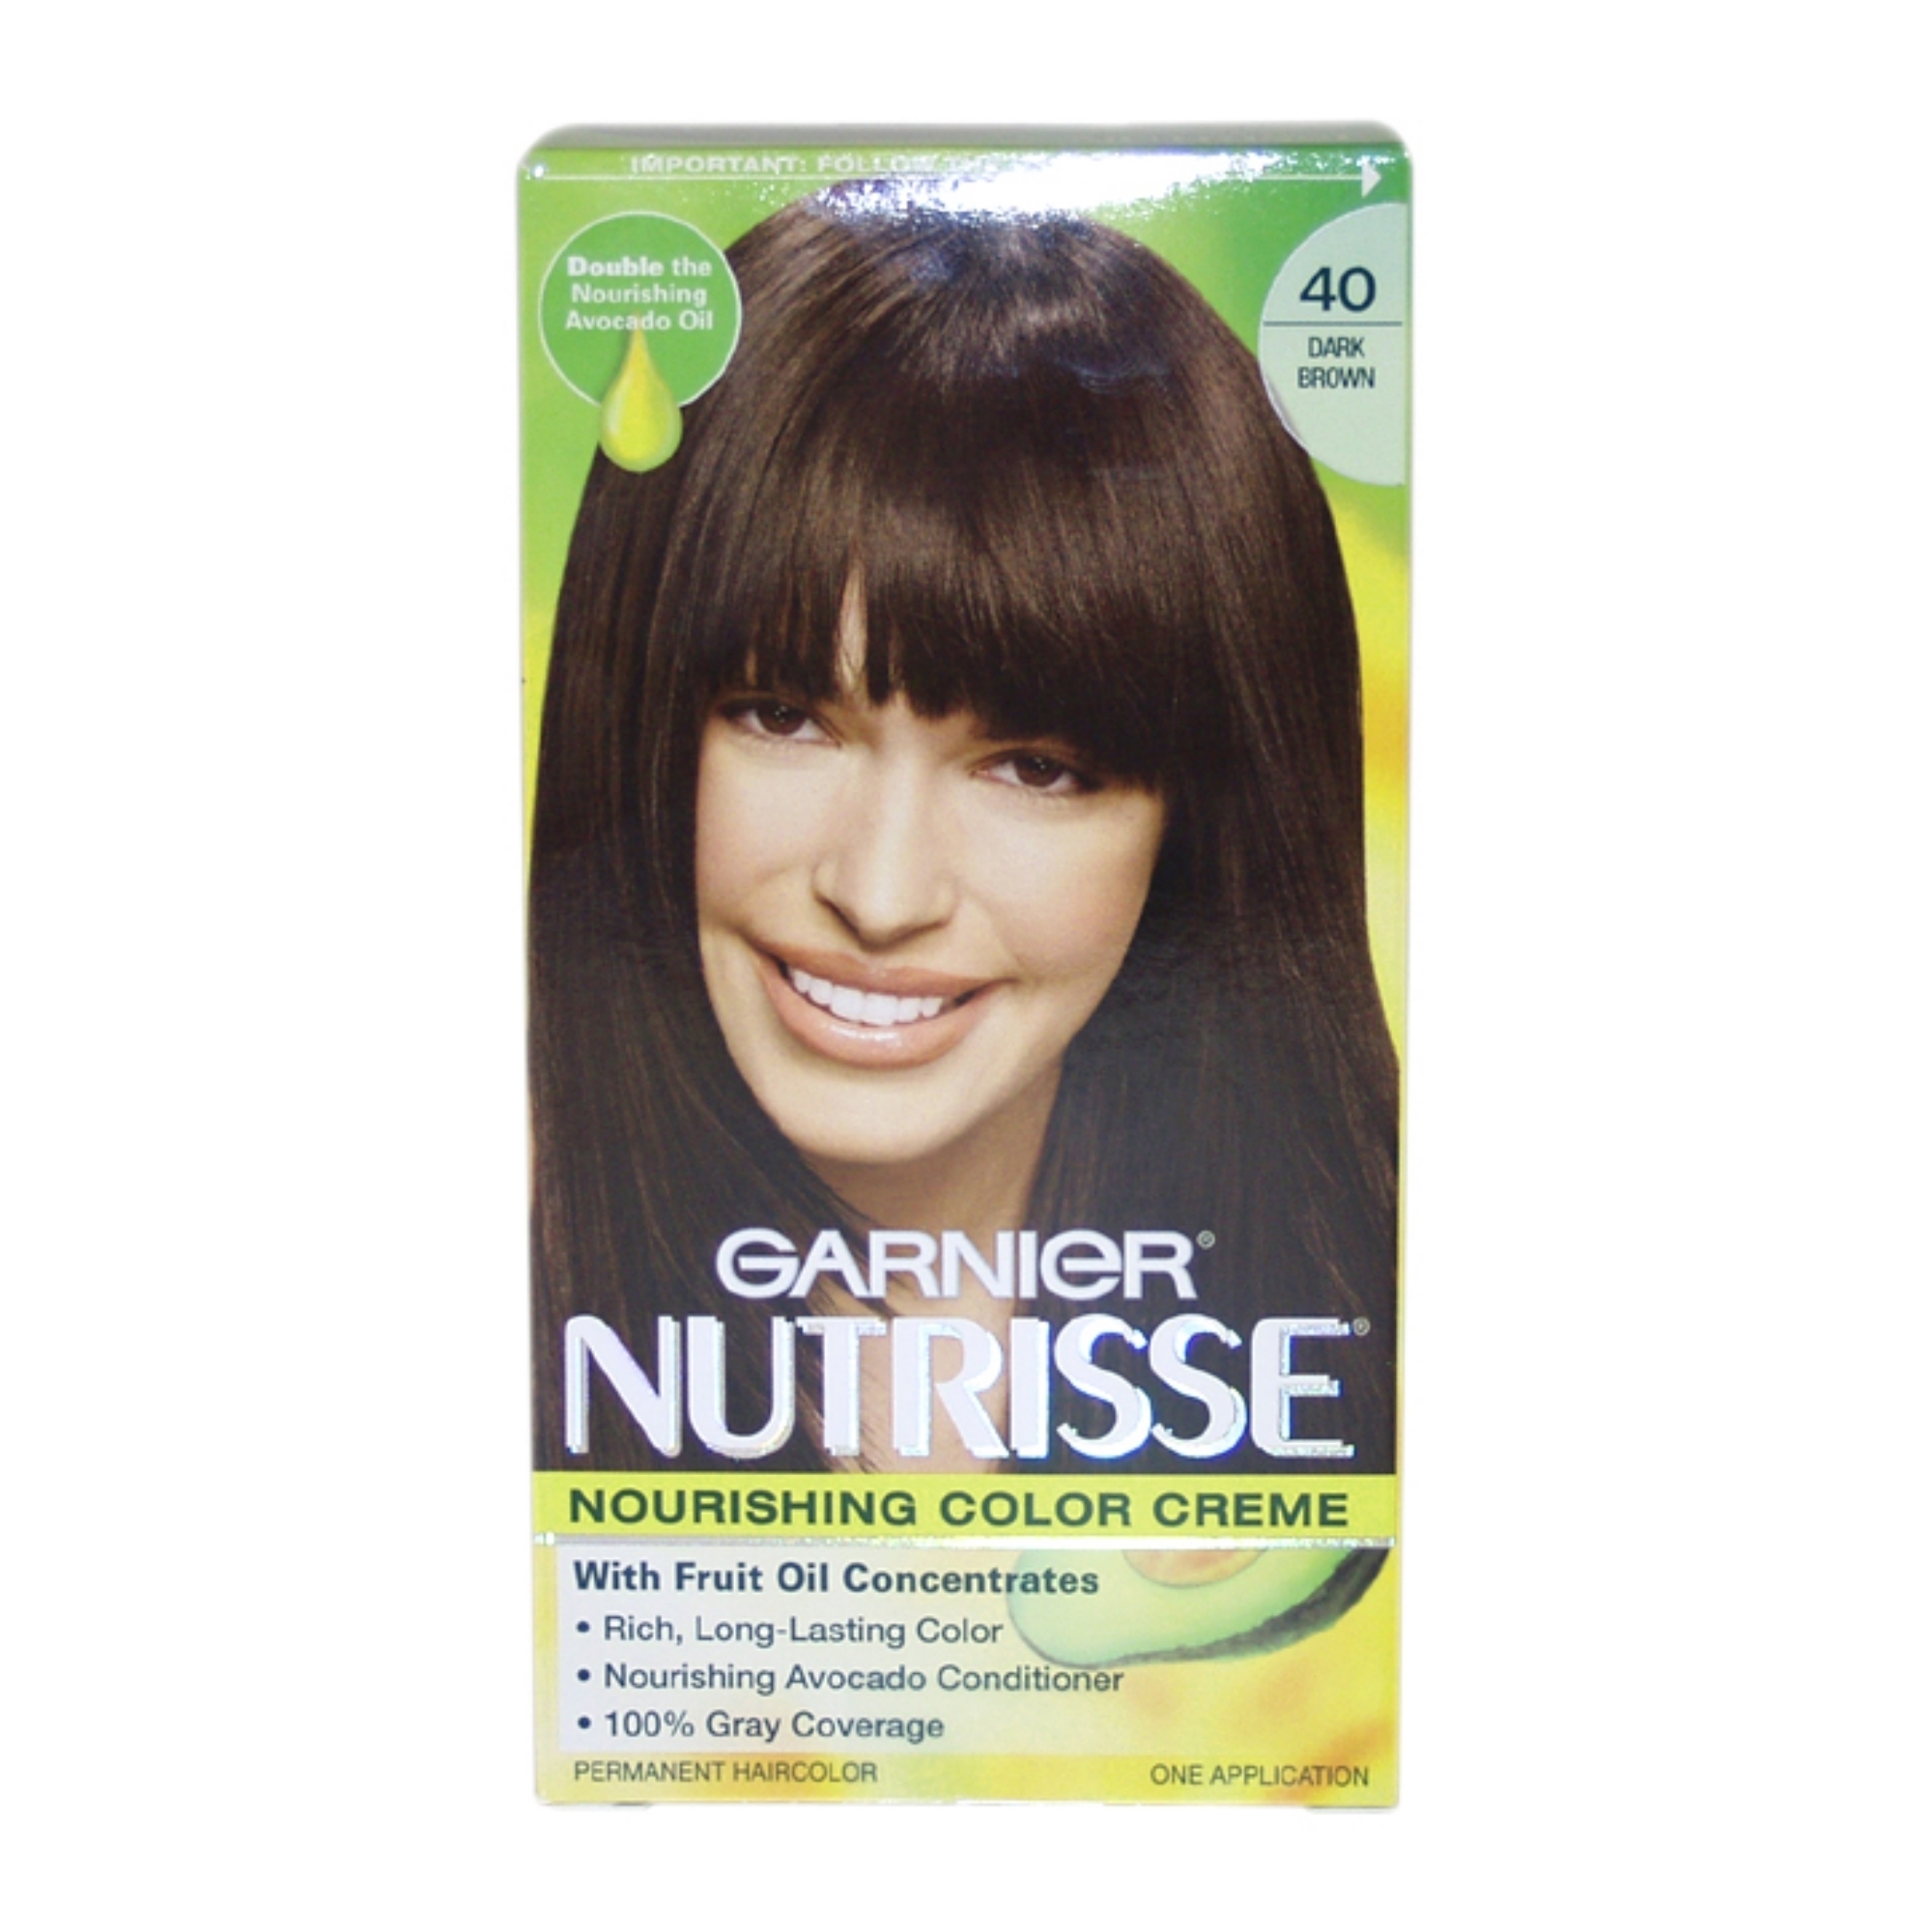 Nutrisse Nourishing Color Creme # 40 Dark Brown by Garnier for Unisex - 1 Application Hair Color